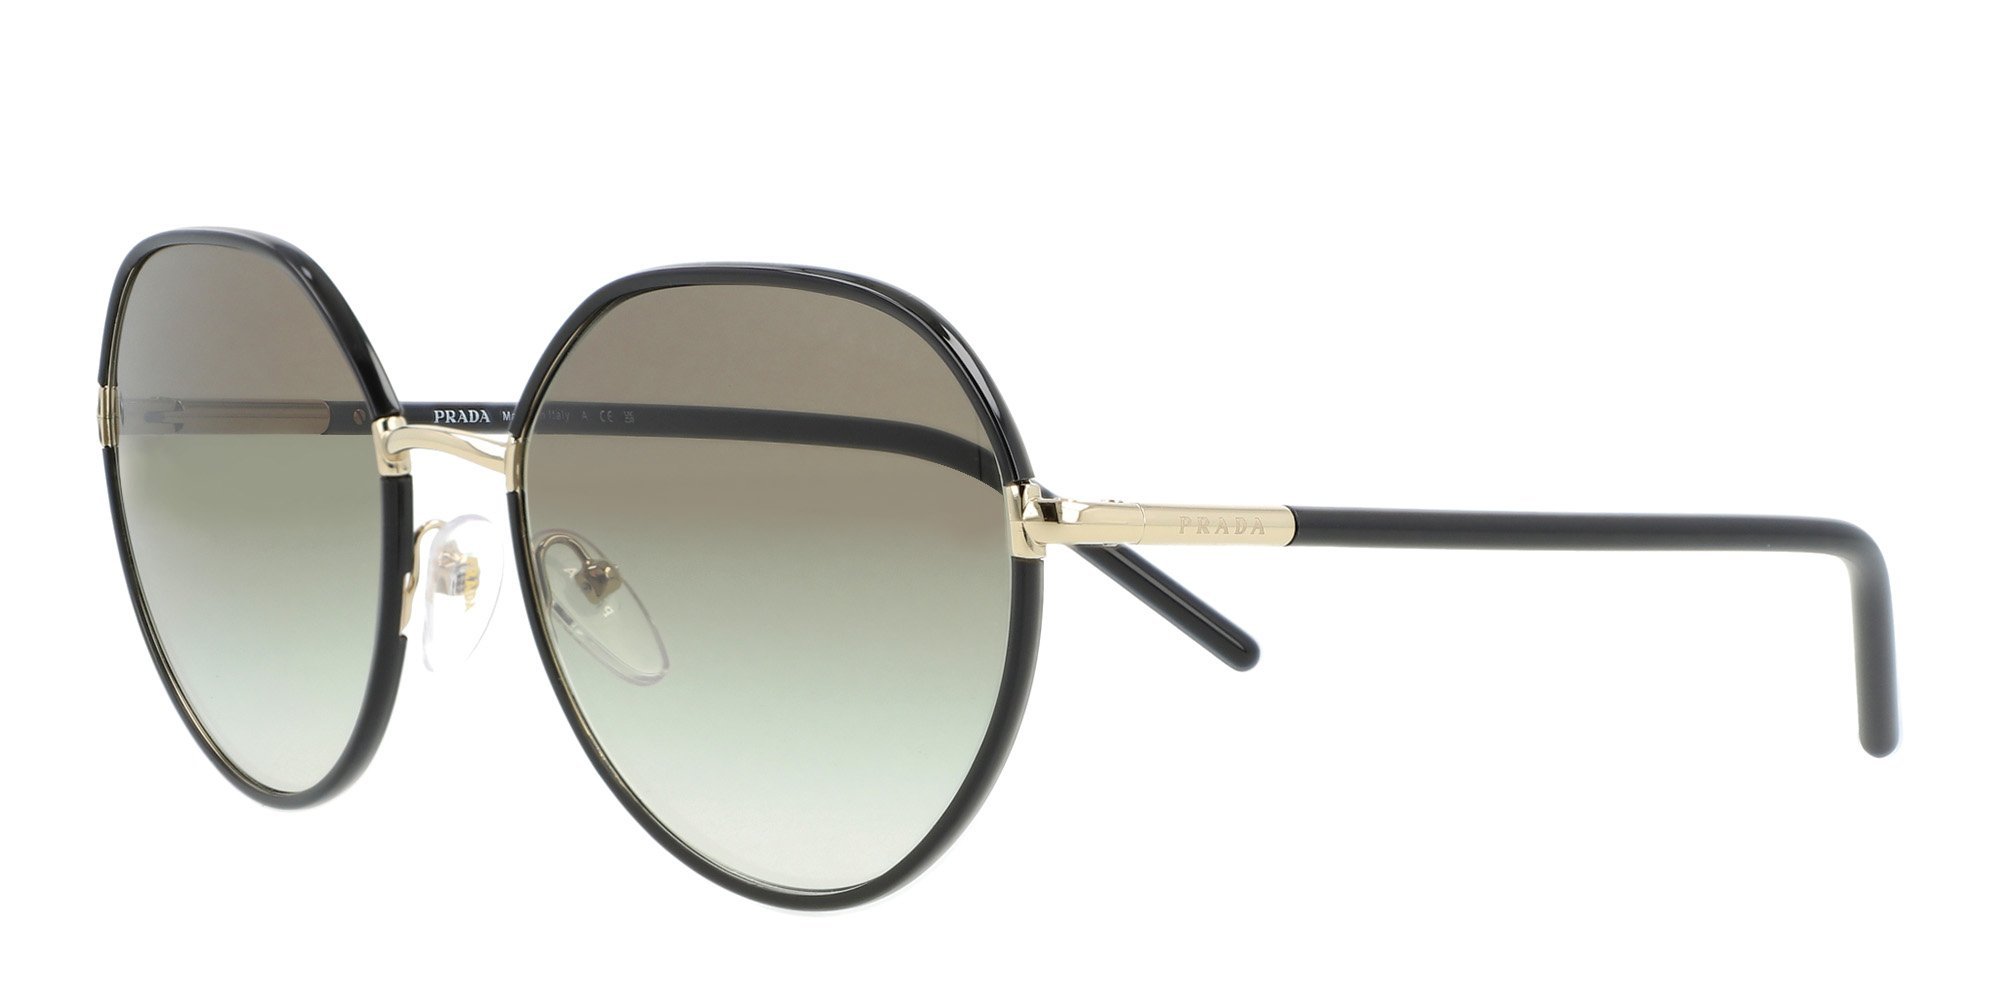 Buy Prada Grey Active Aviator Sunglasses for Men Online @ Tata CLiQ Luxury